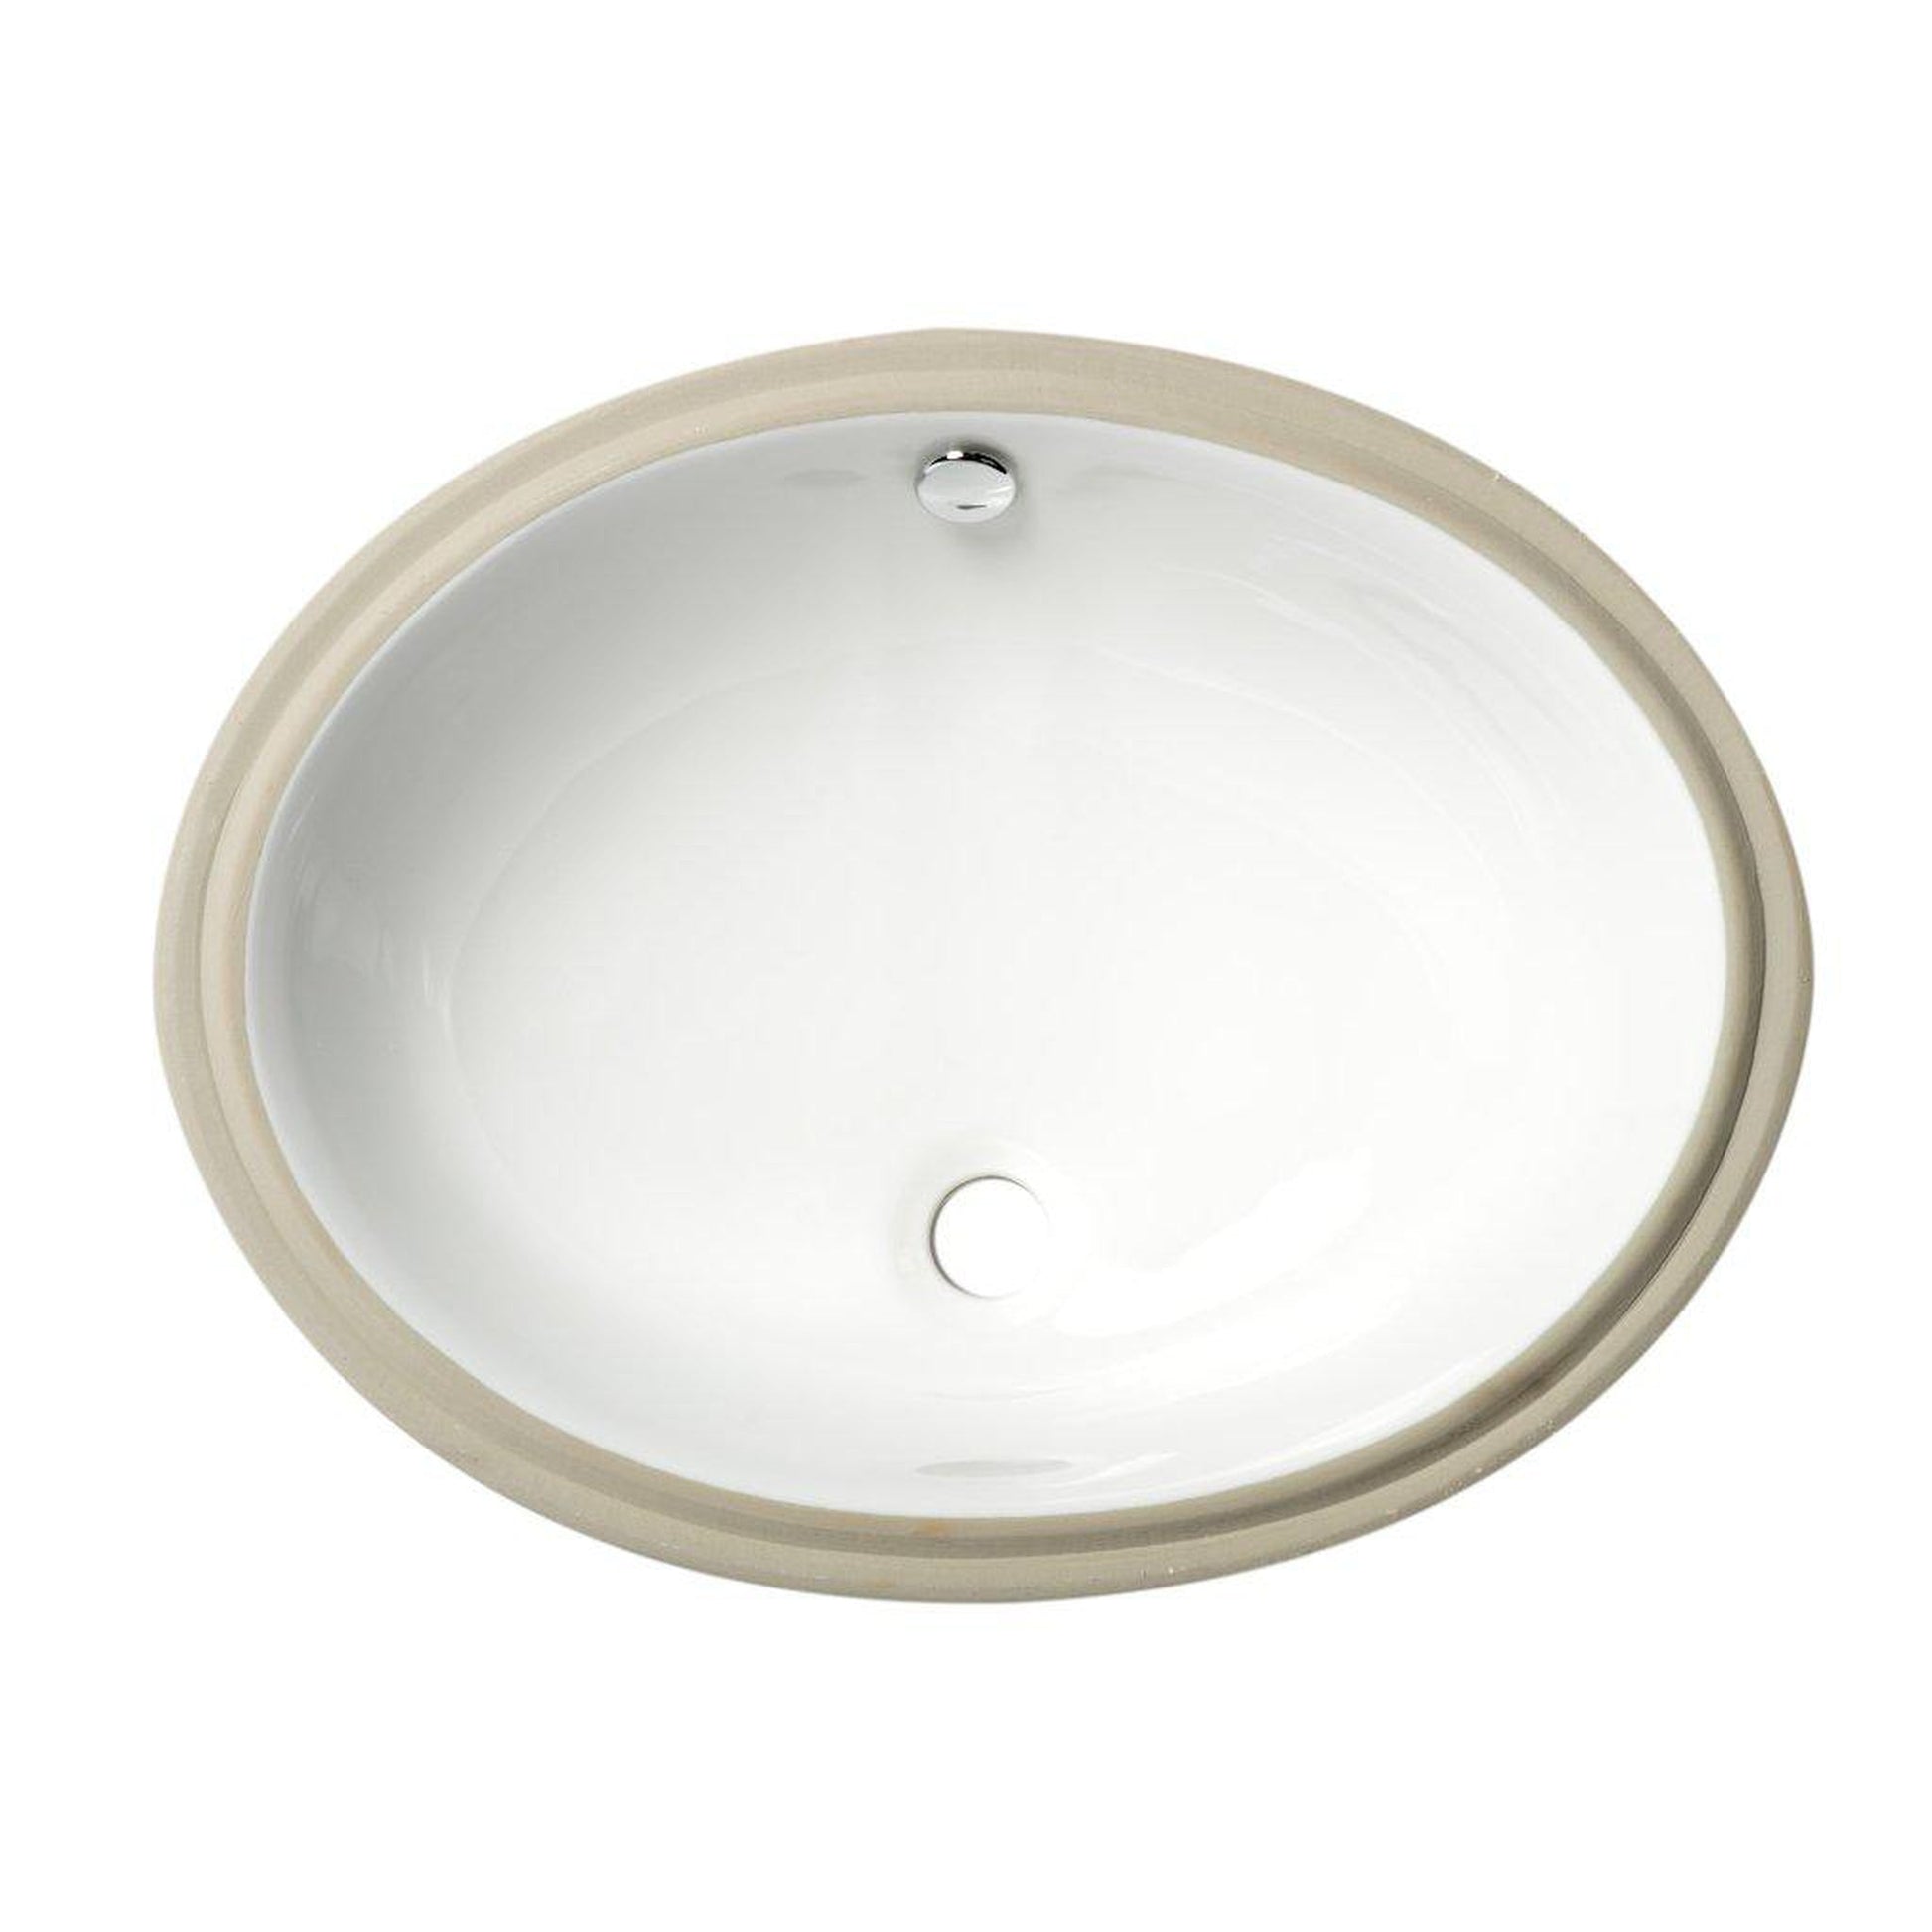 ALFI Brand ABC602 23" White Glossy Undermount Oval Ceramic Bathroom Sink With Overflow